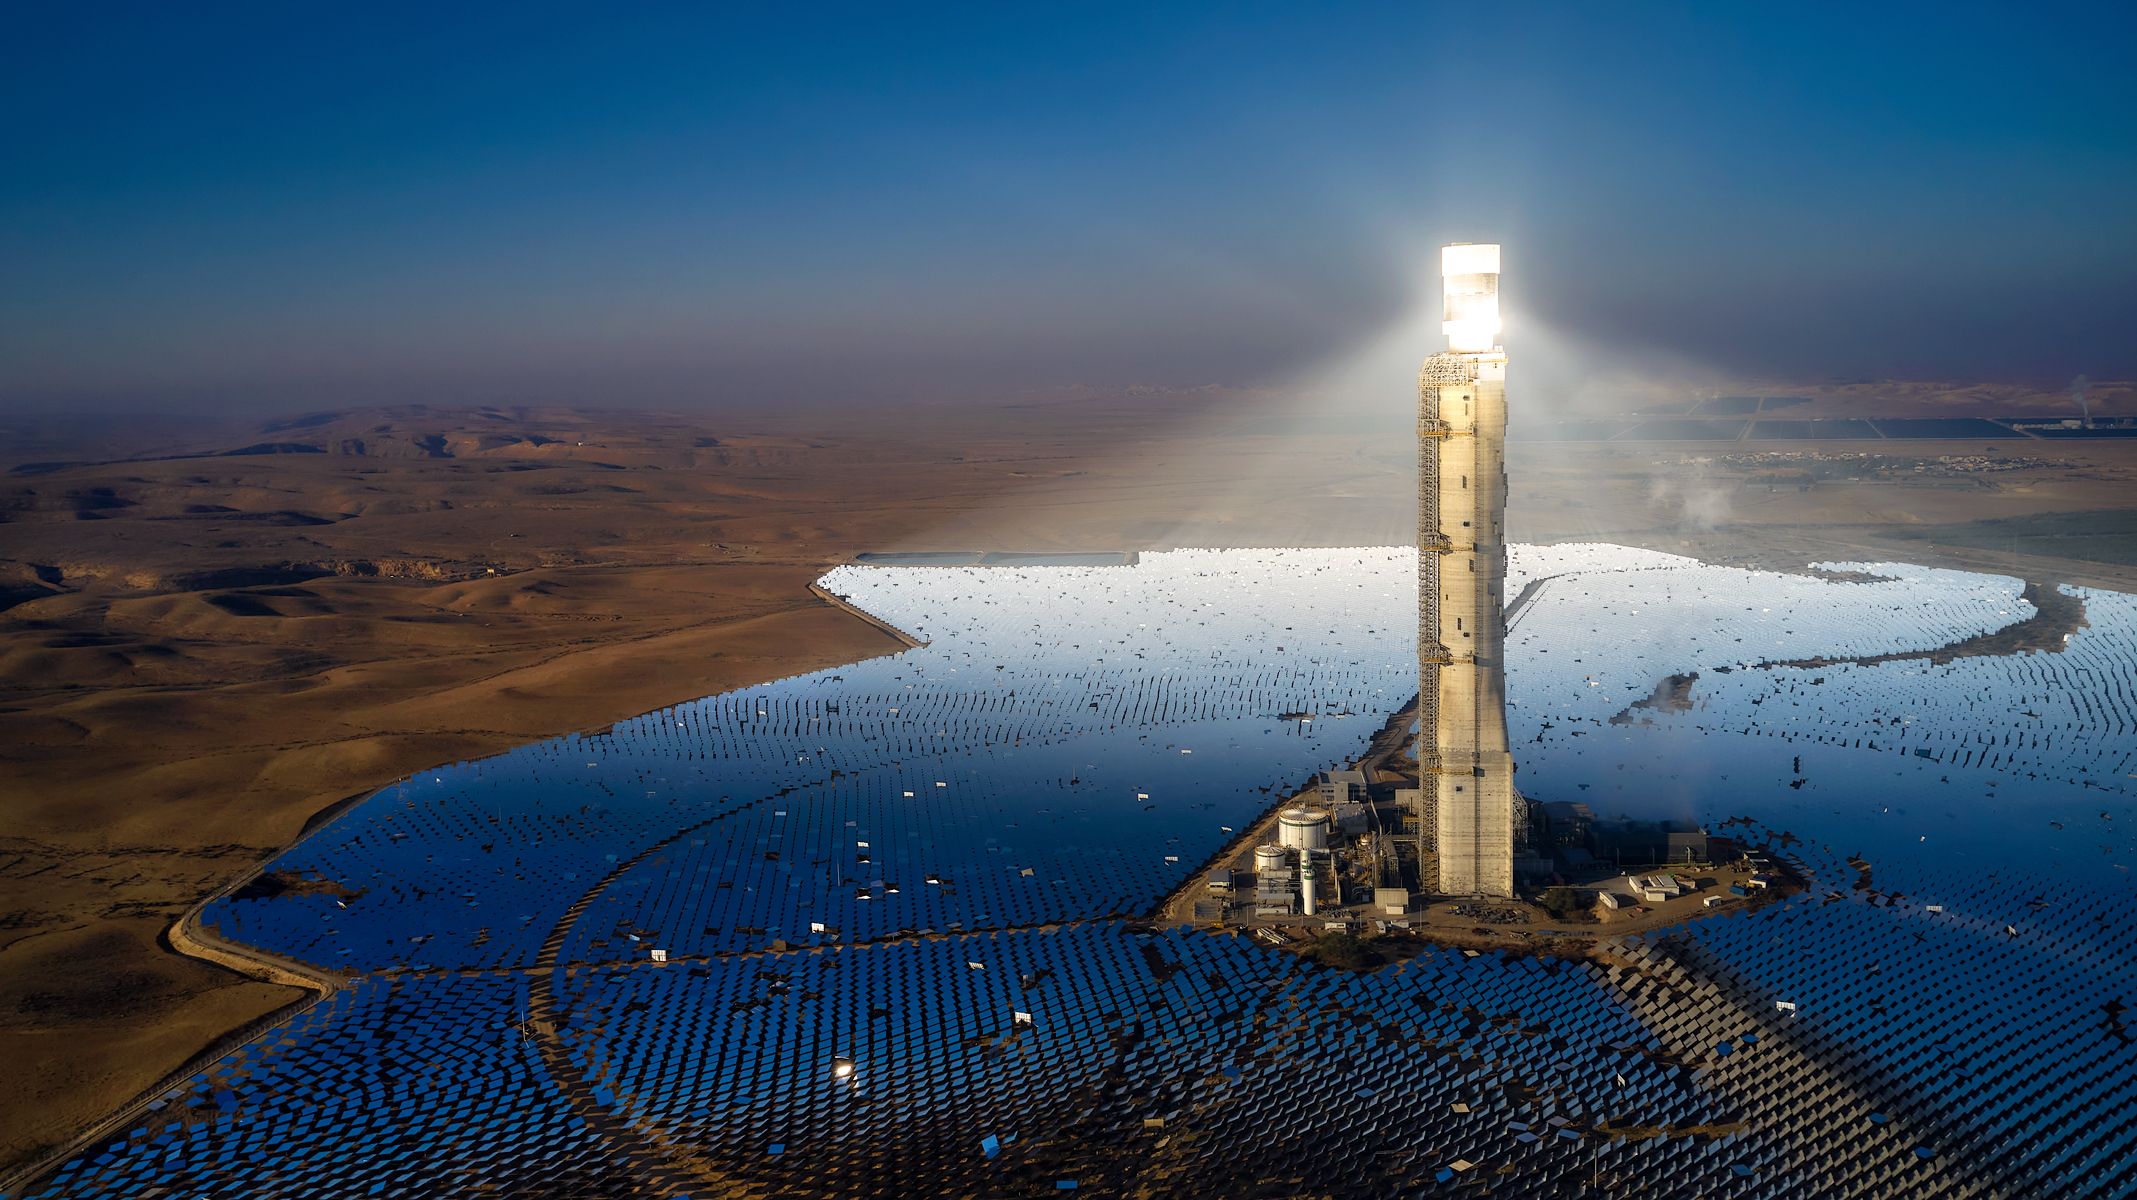 thermo-solar power plant in the negev desert of israel, Boris Bekelman